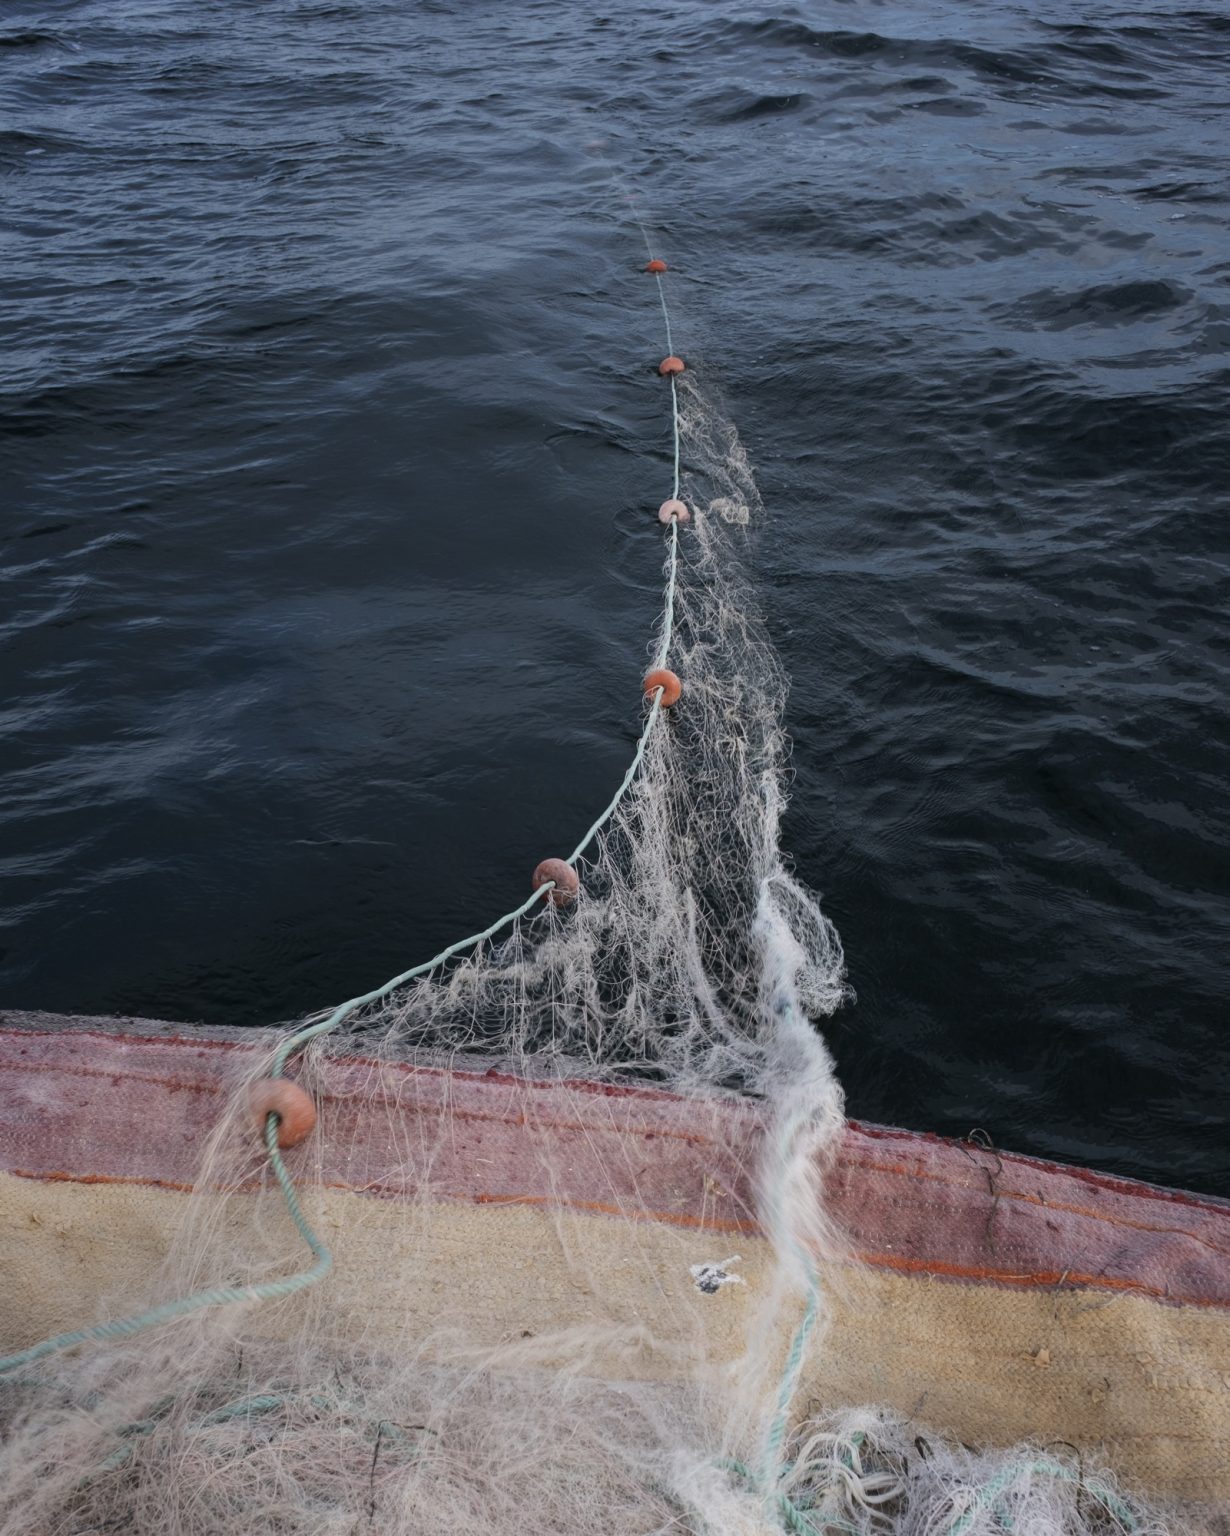 Kerkennah Islands (Tunisia), June 2022 - The nets roll out into the sea as Sara rows the boat.
><
Isole Kerkennah (Tunisia), giugno 2022 - Le reti si srotolano in mare mentre Sara rema la barca.